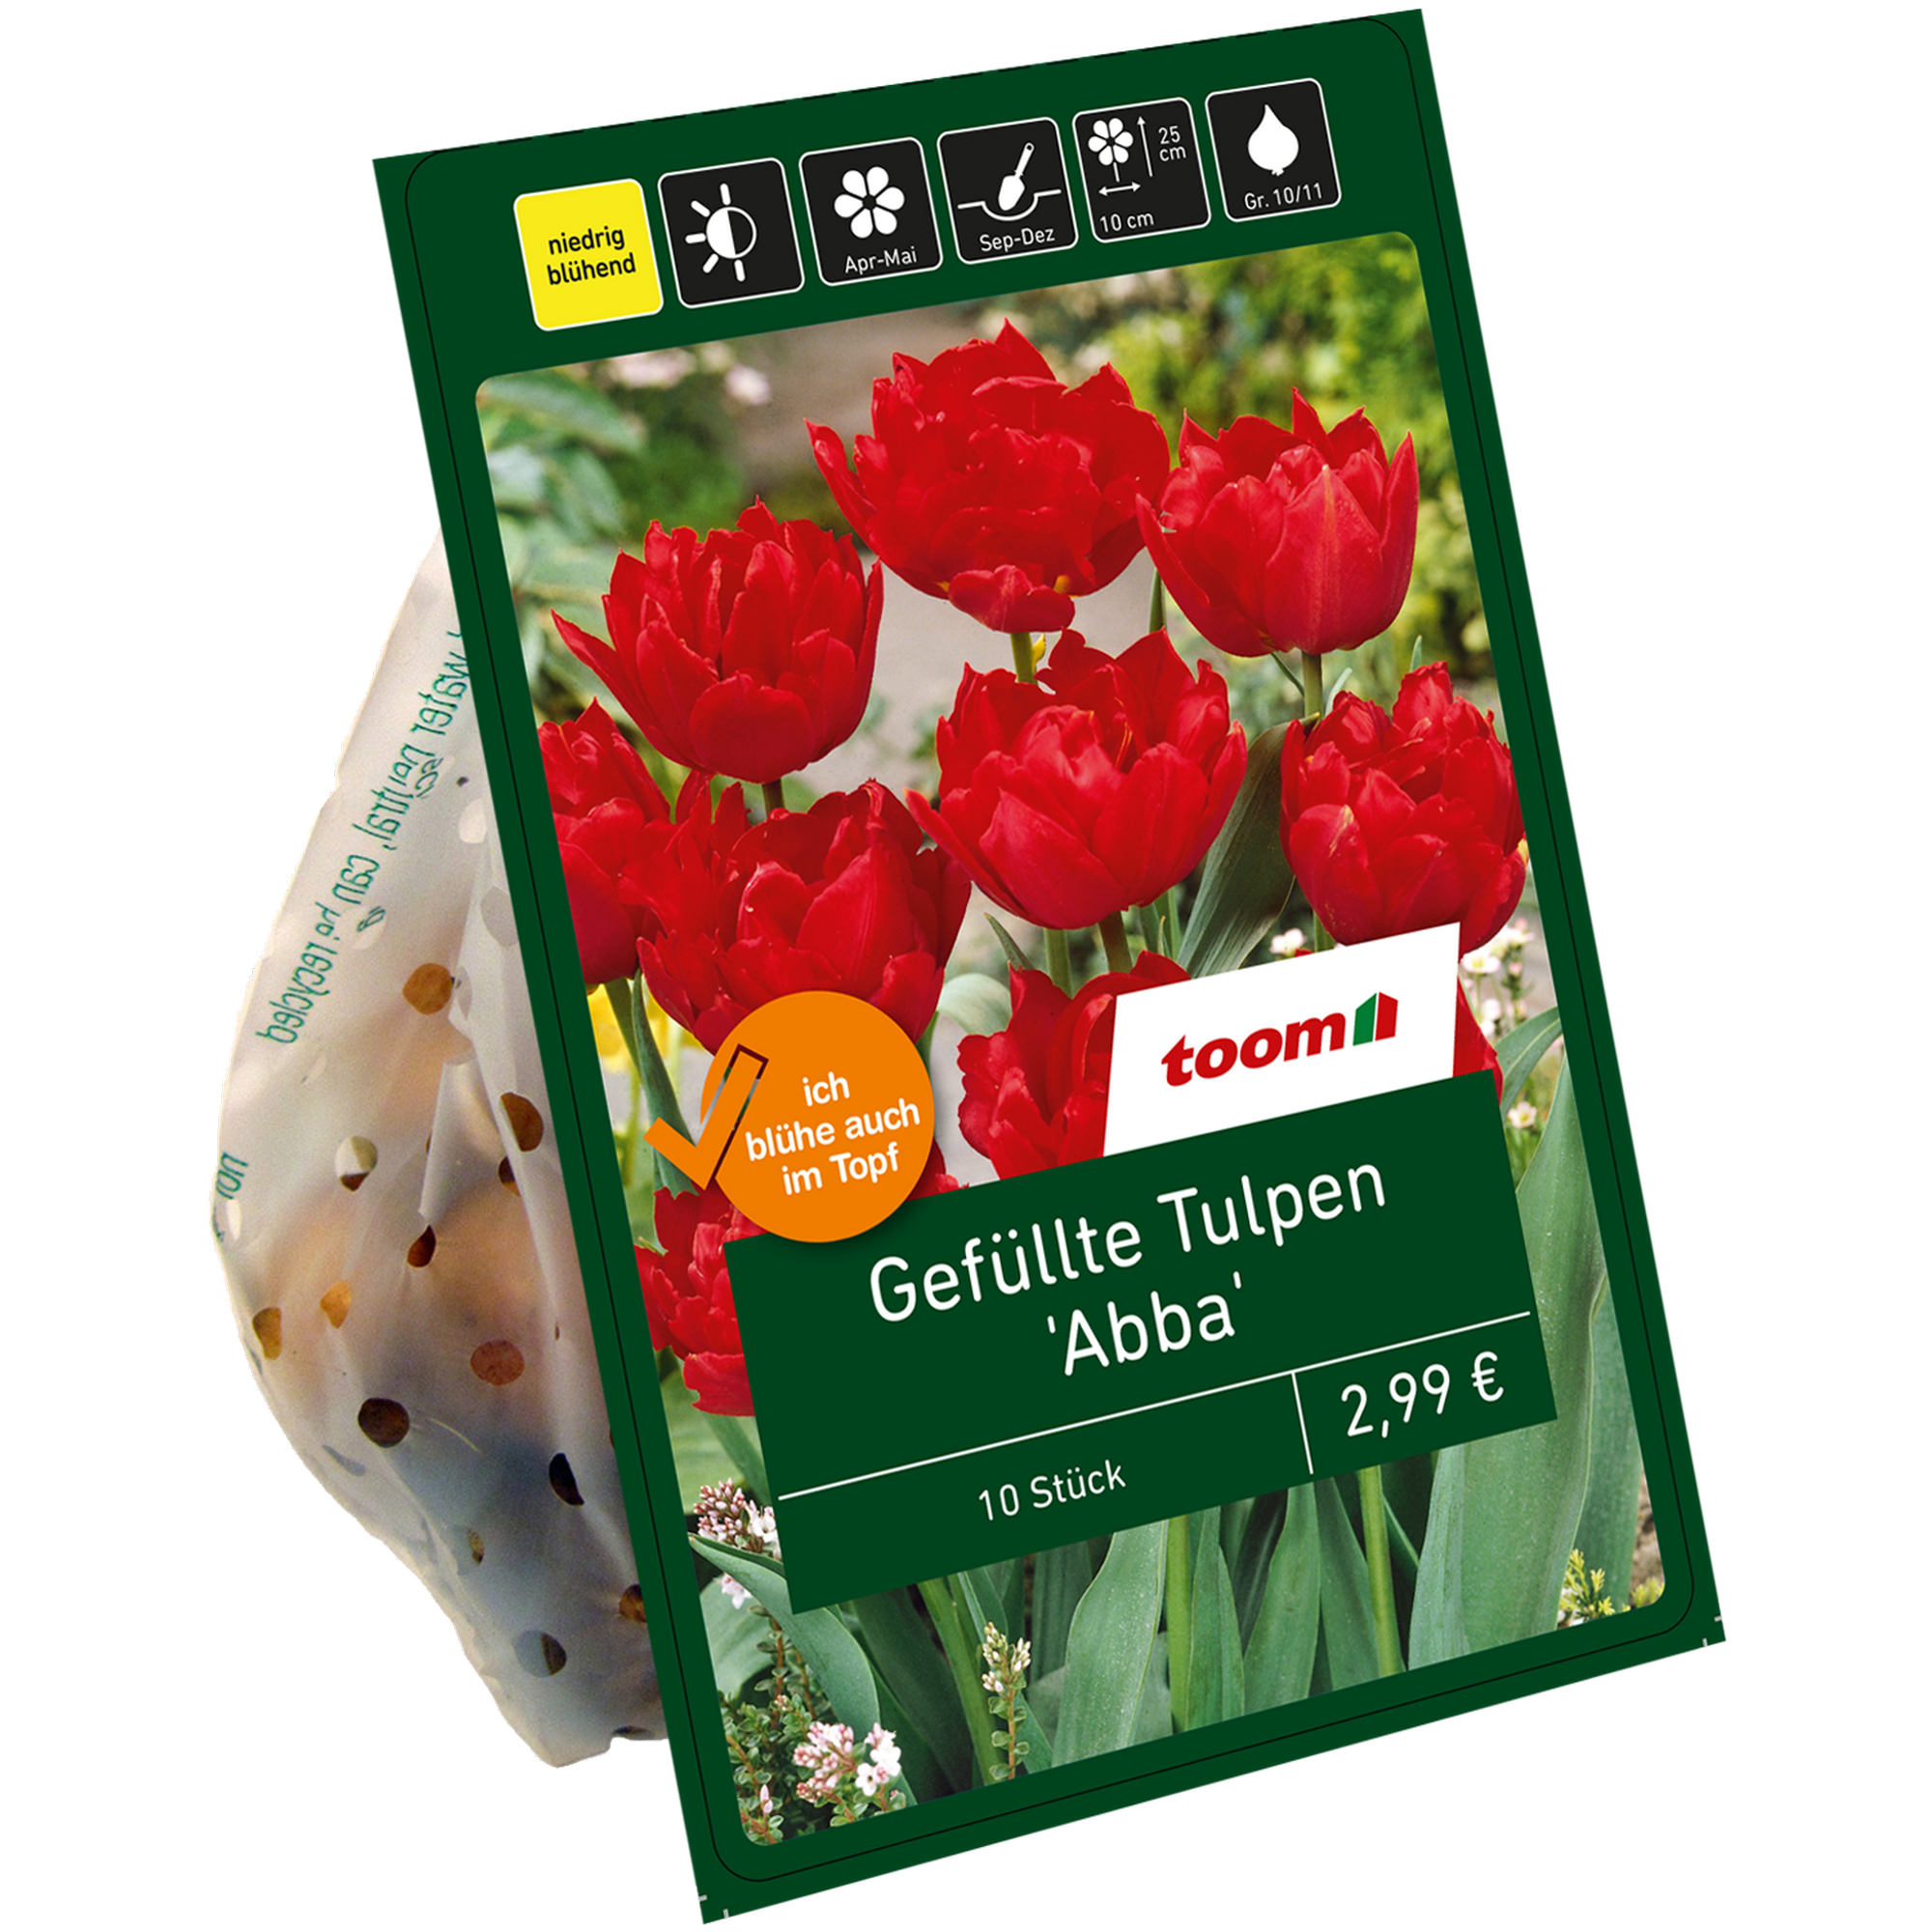 Gefüllte Tulpen 'Abba' rot 10 Zwiebeln + product picture